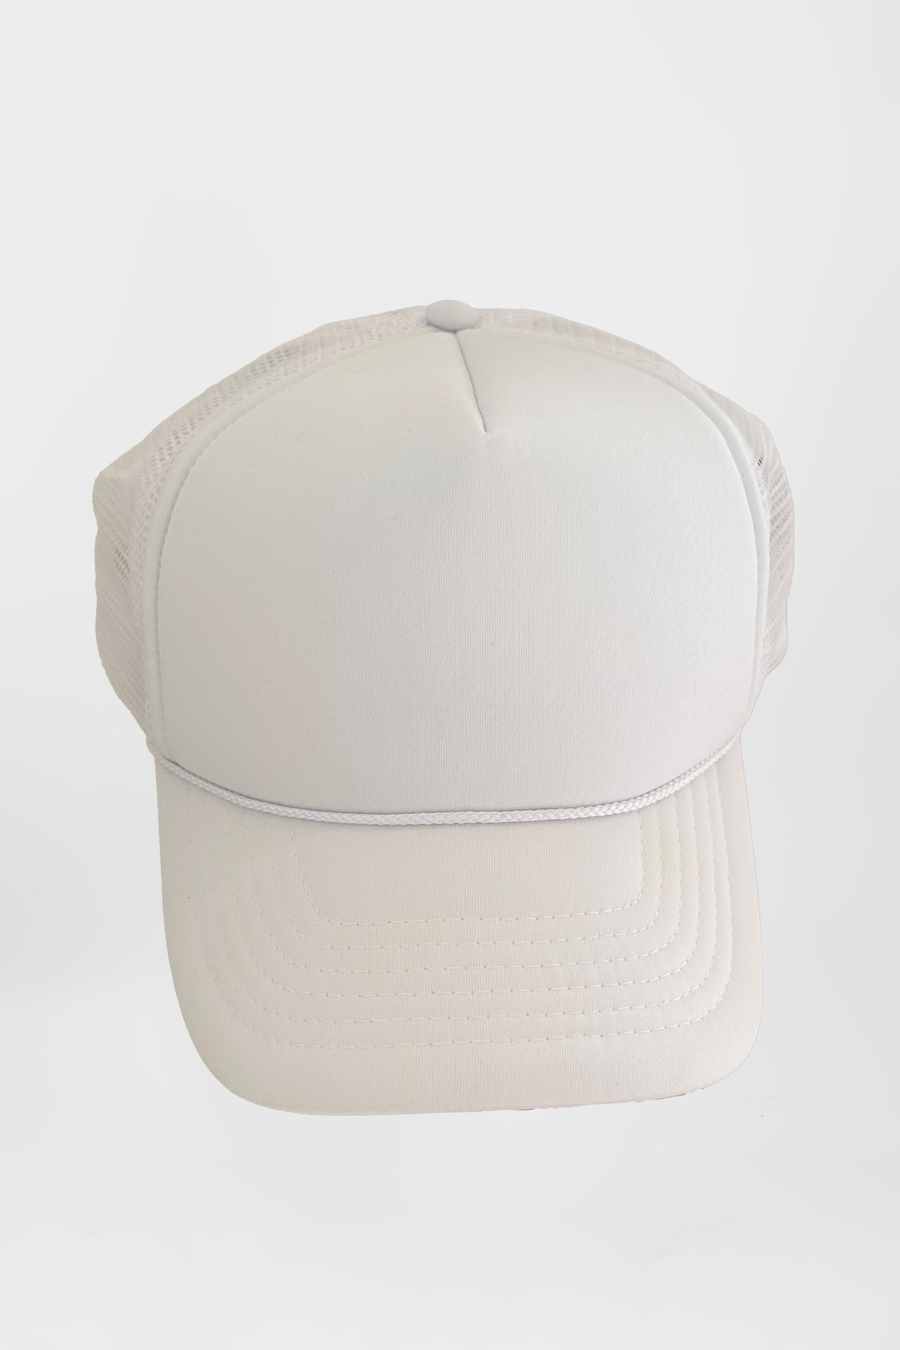 Trucker Hat White *Limited*Edition*